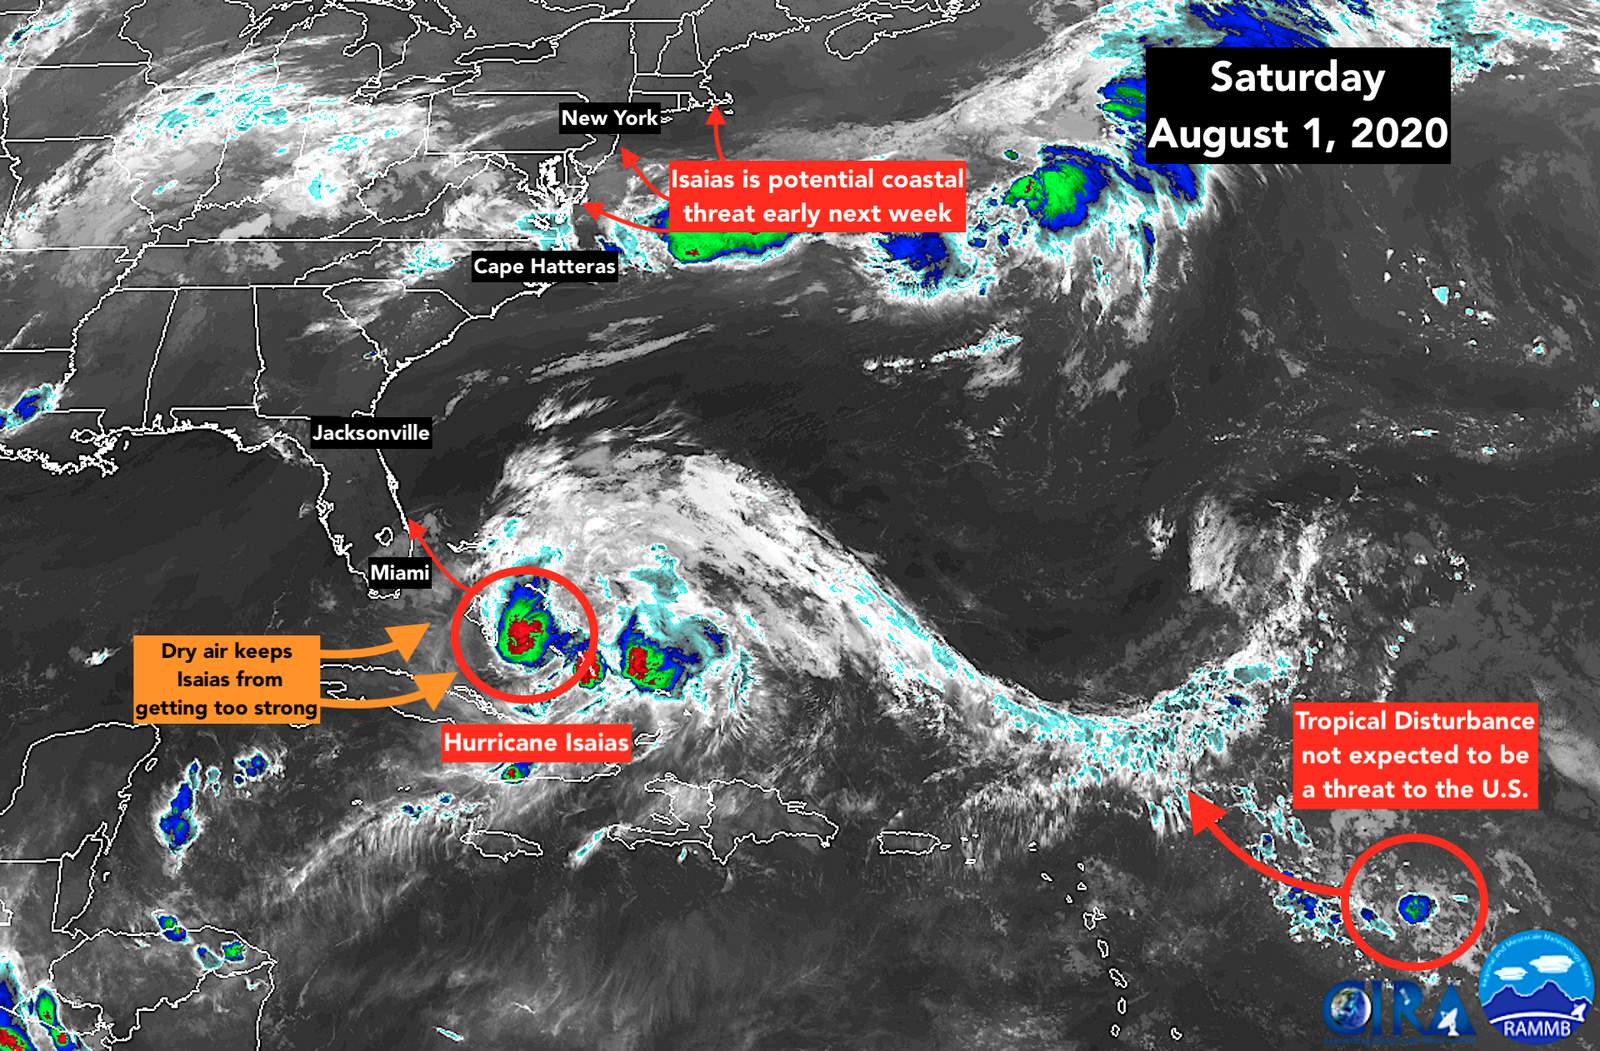 Norcross: Hurricane Isaias to impact Florida beginning today